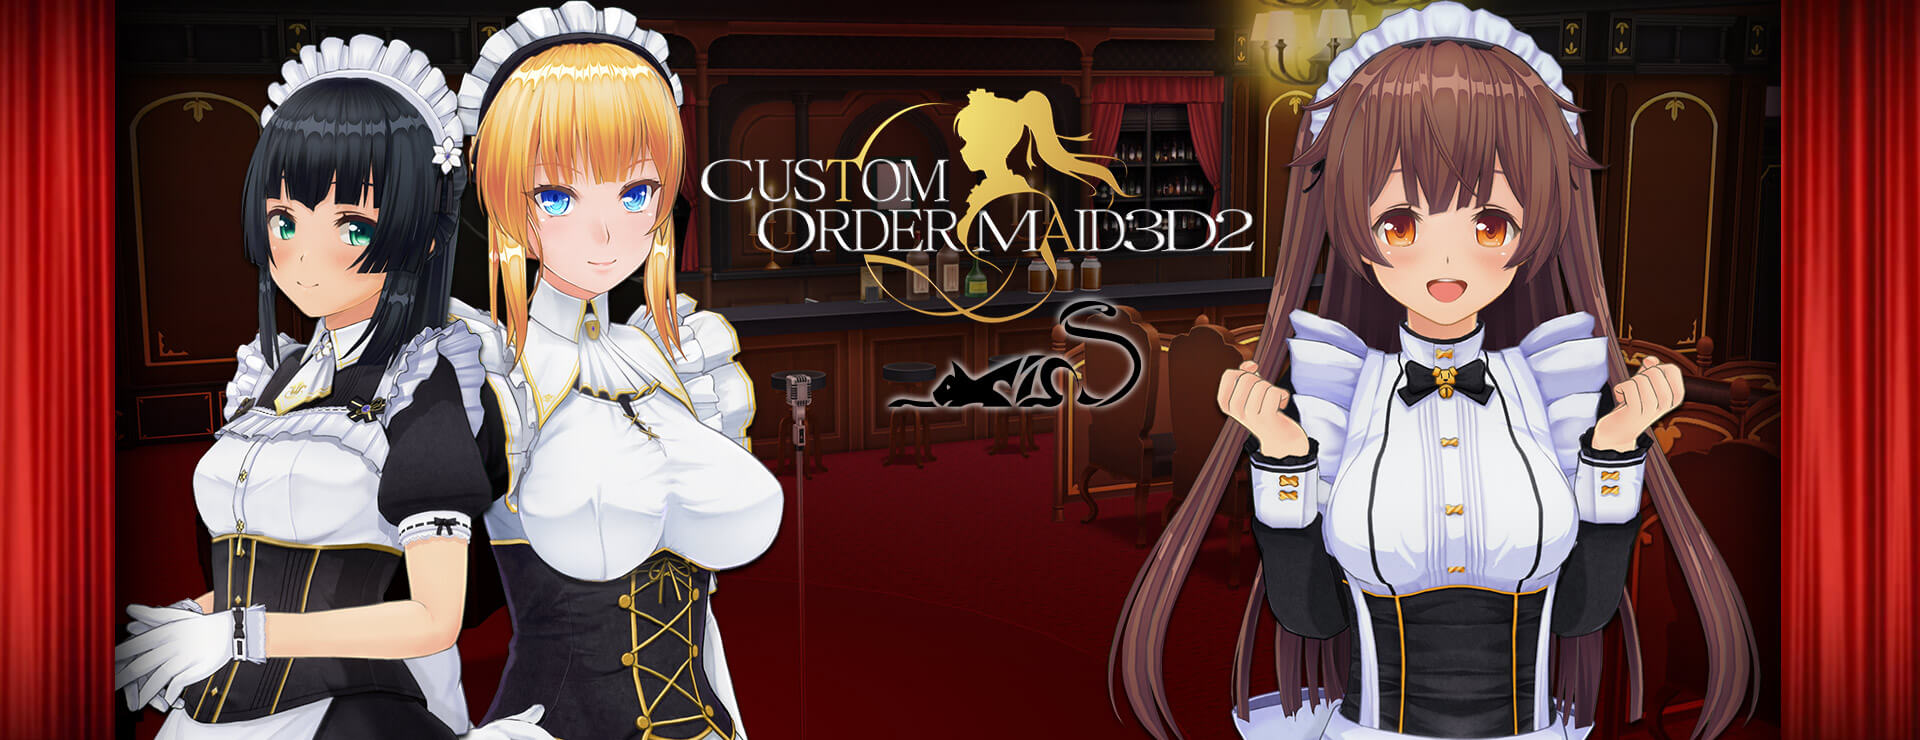 Custom Order Maid 3D2 Game - Simulation Spiel